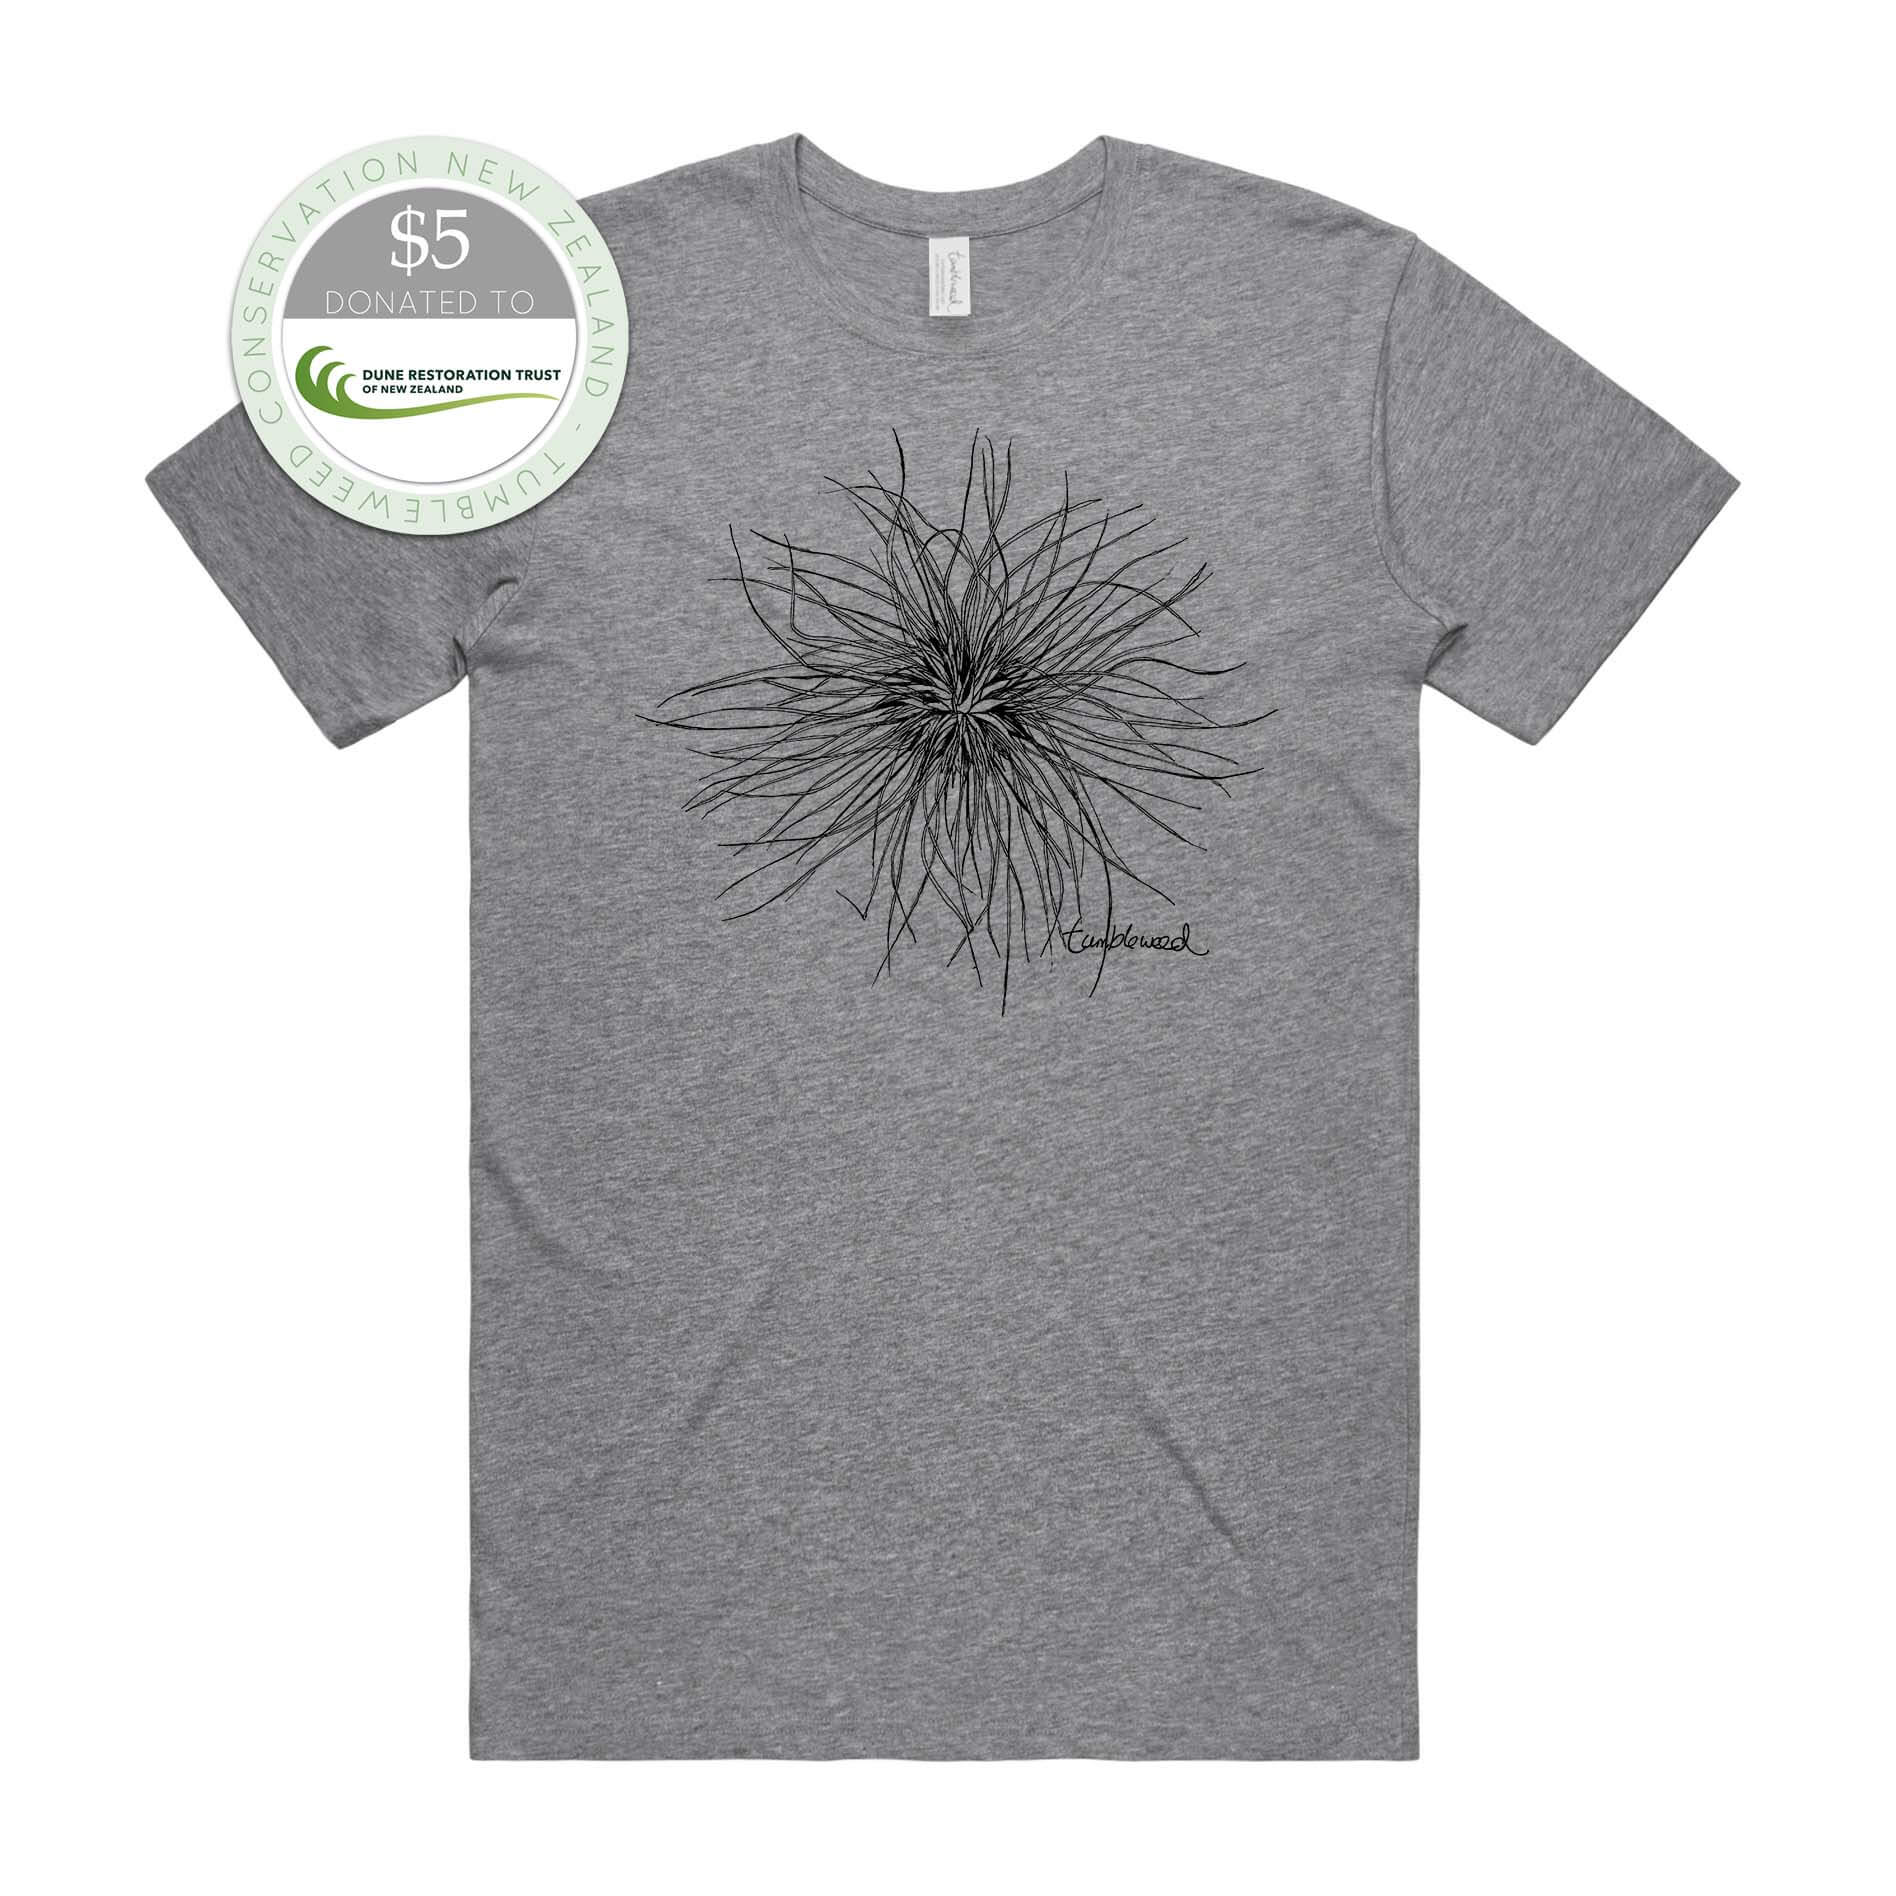 Sage, female t-shirt featuring a screen printed Tumbleweed design.